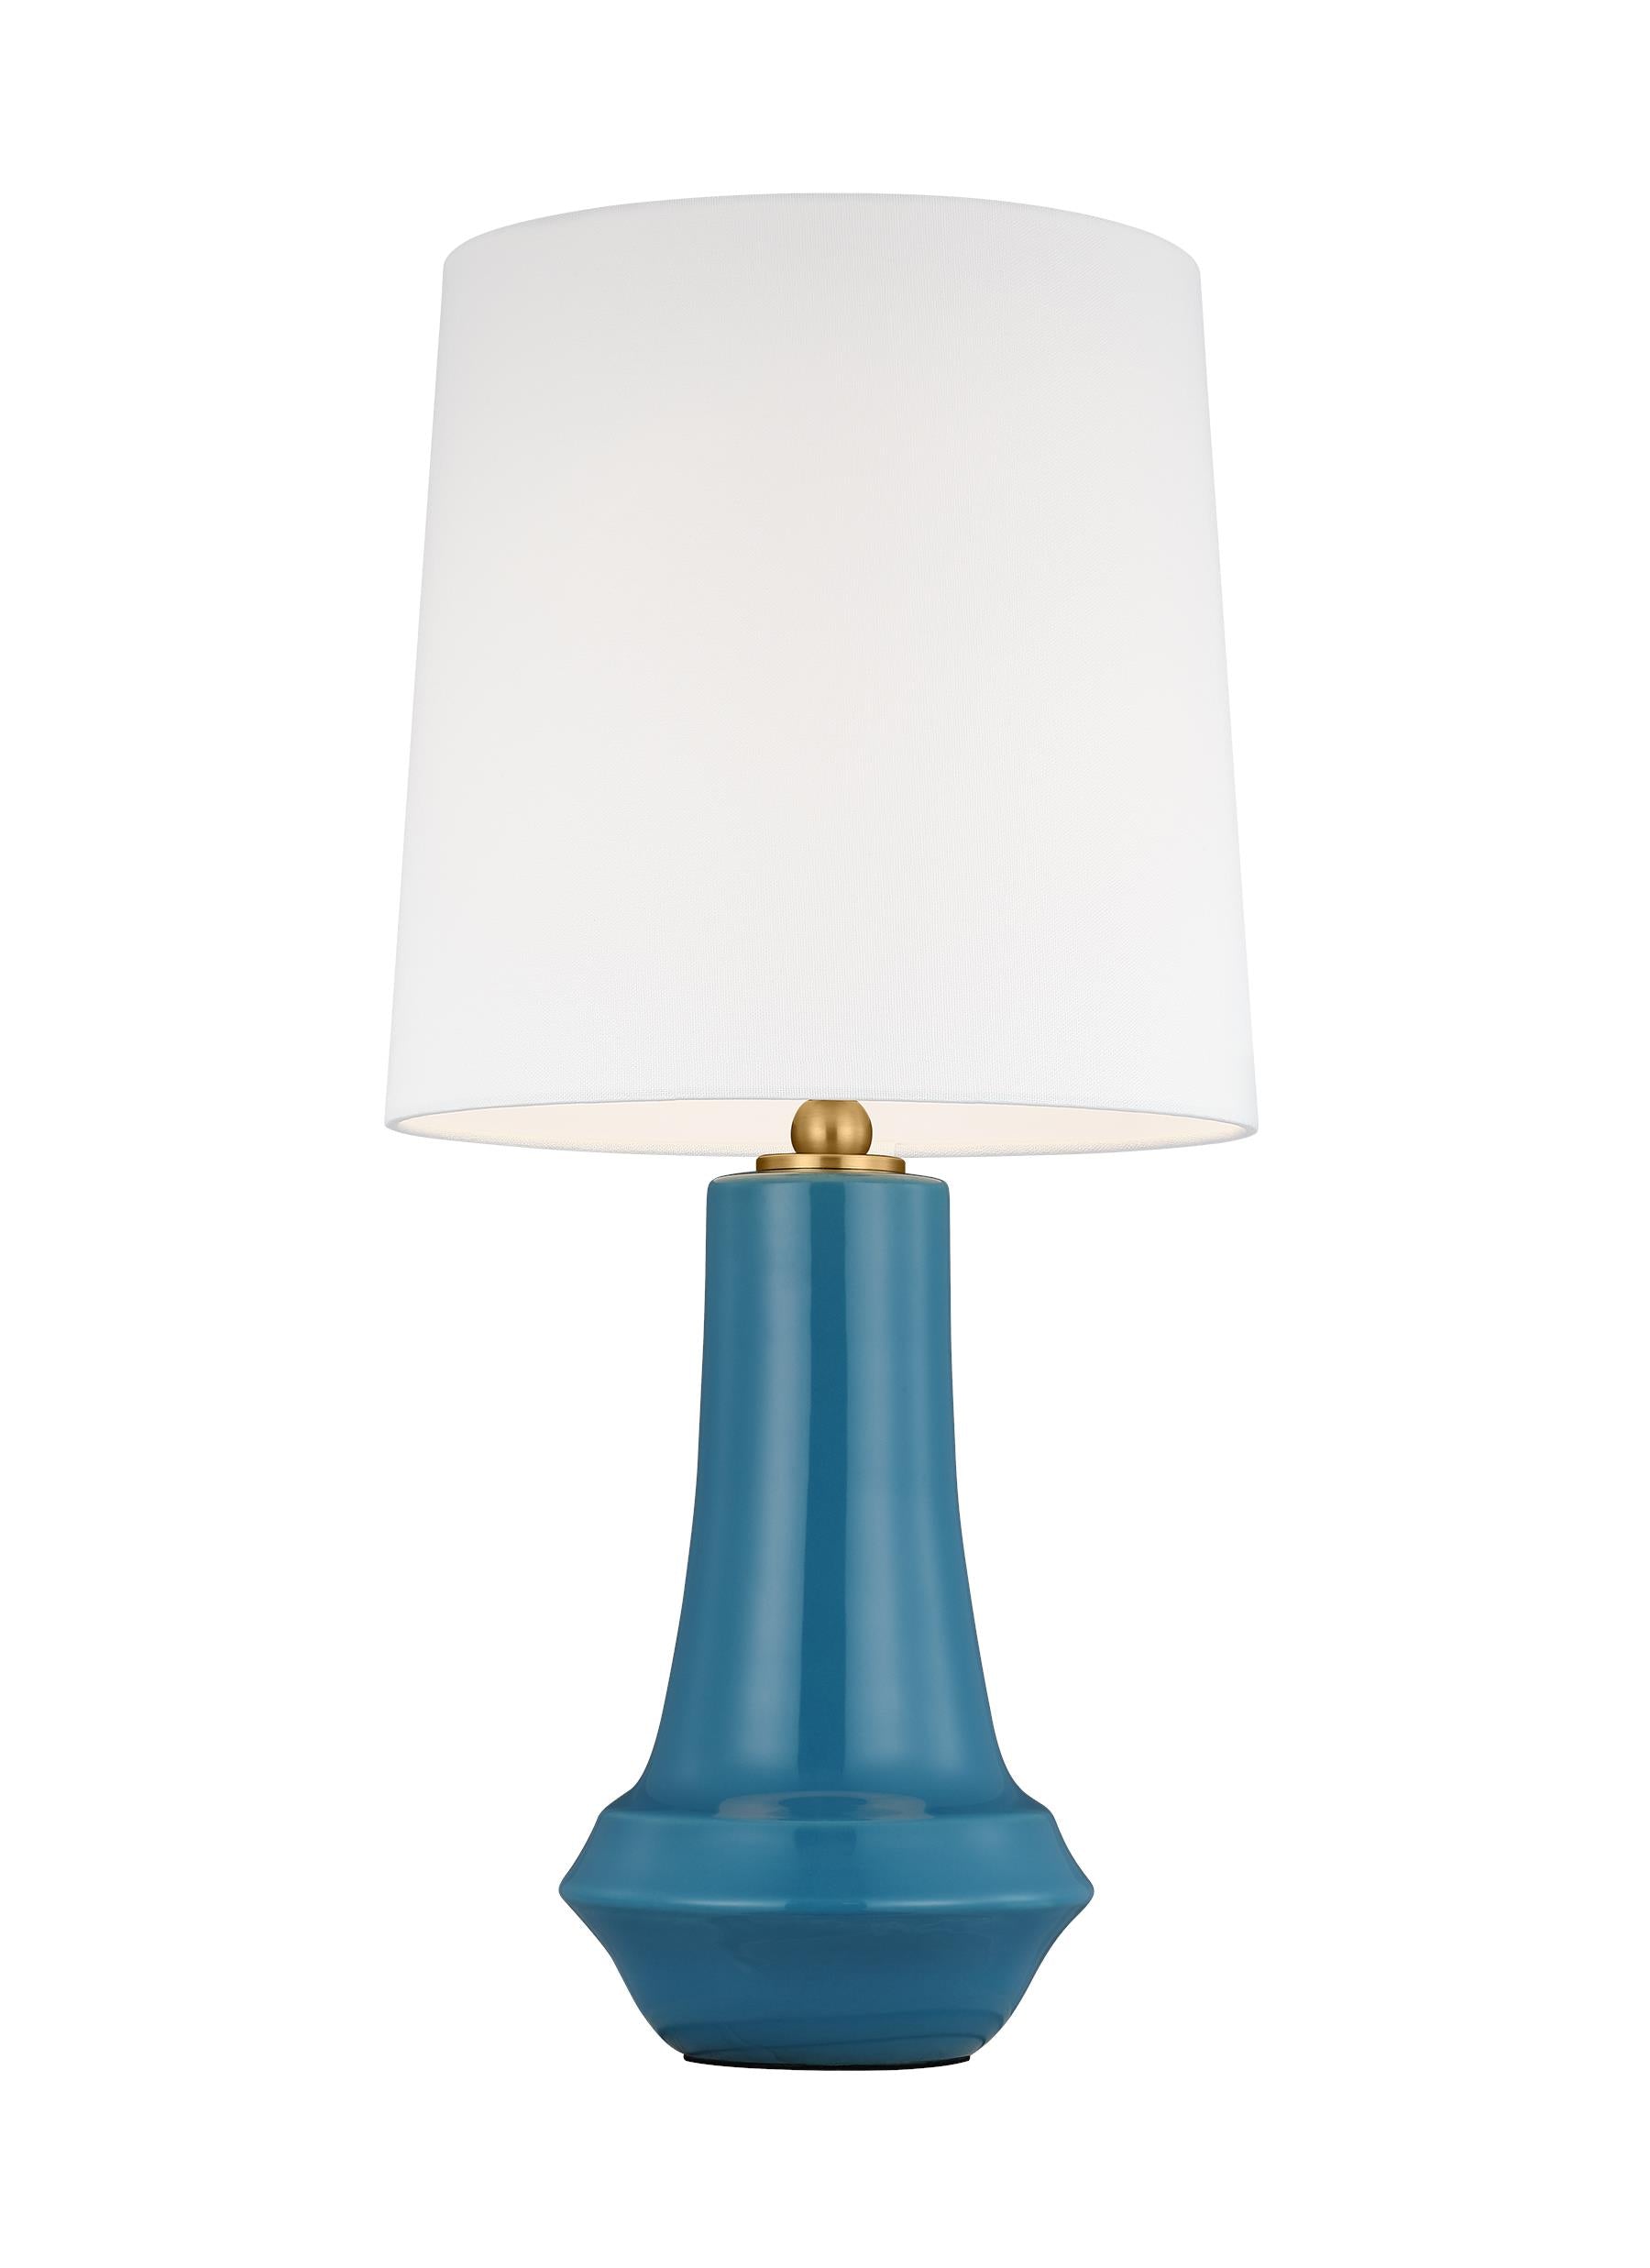 JENNA 1L table lamp, Lucent Aqua finish - TT1231LAQ1